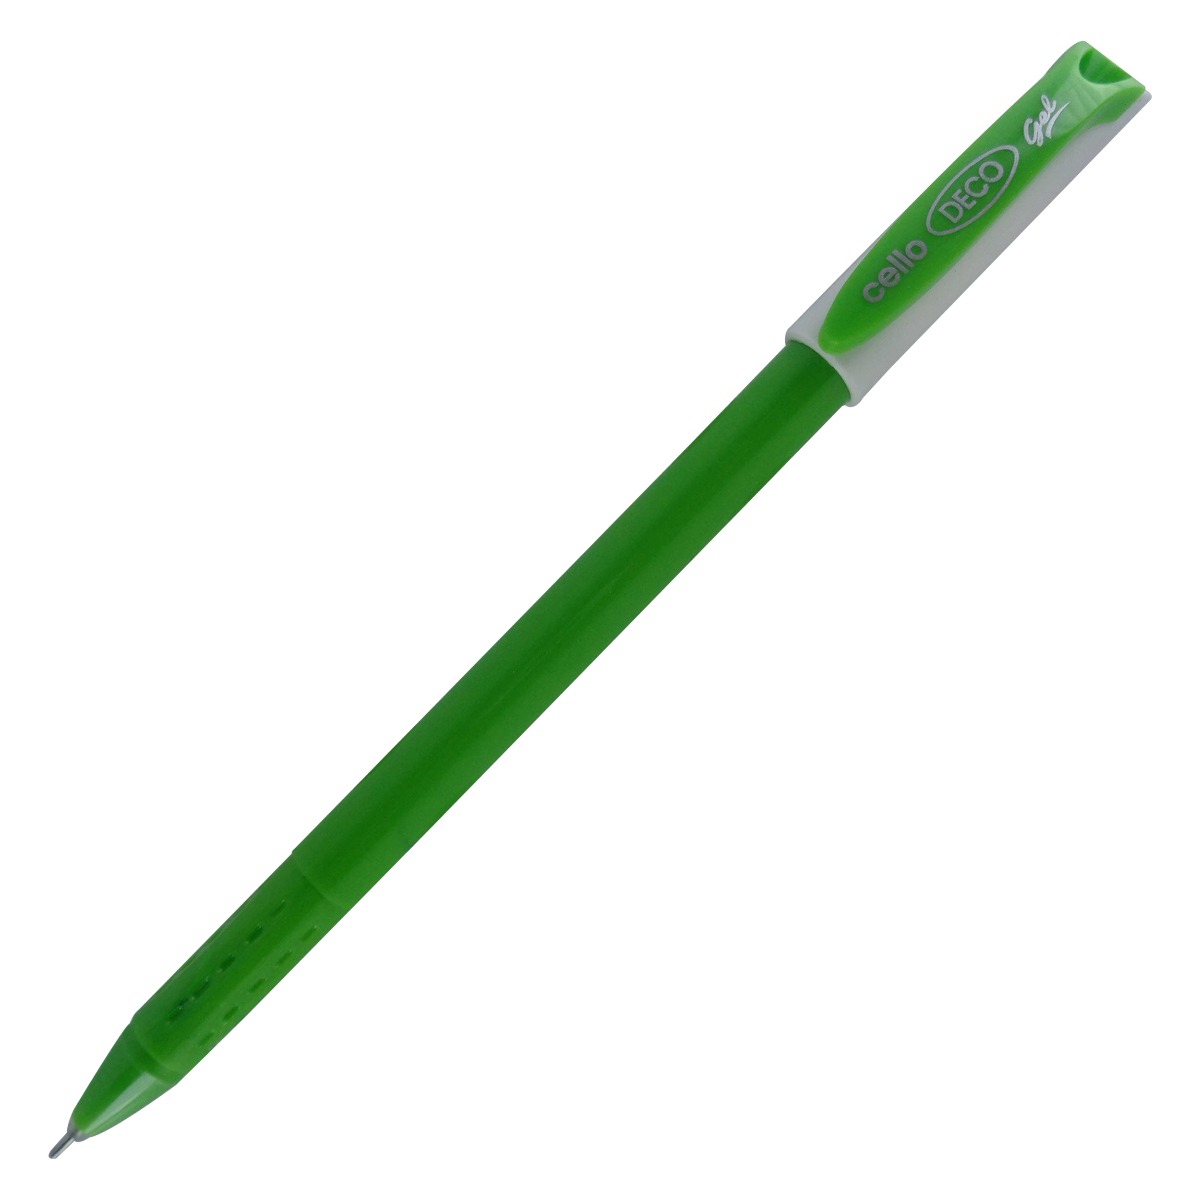 Cello Model: 14897 Deco Gel Green color body with white cap Blue ink fine tip cap type gel pen